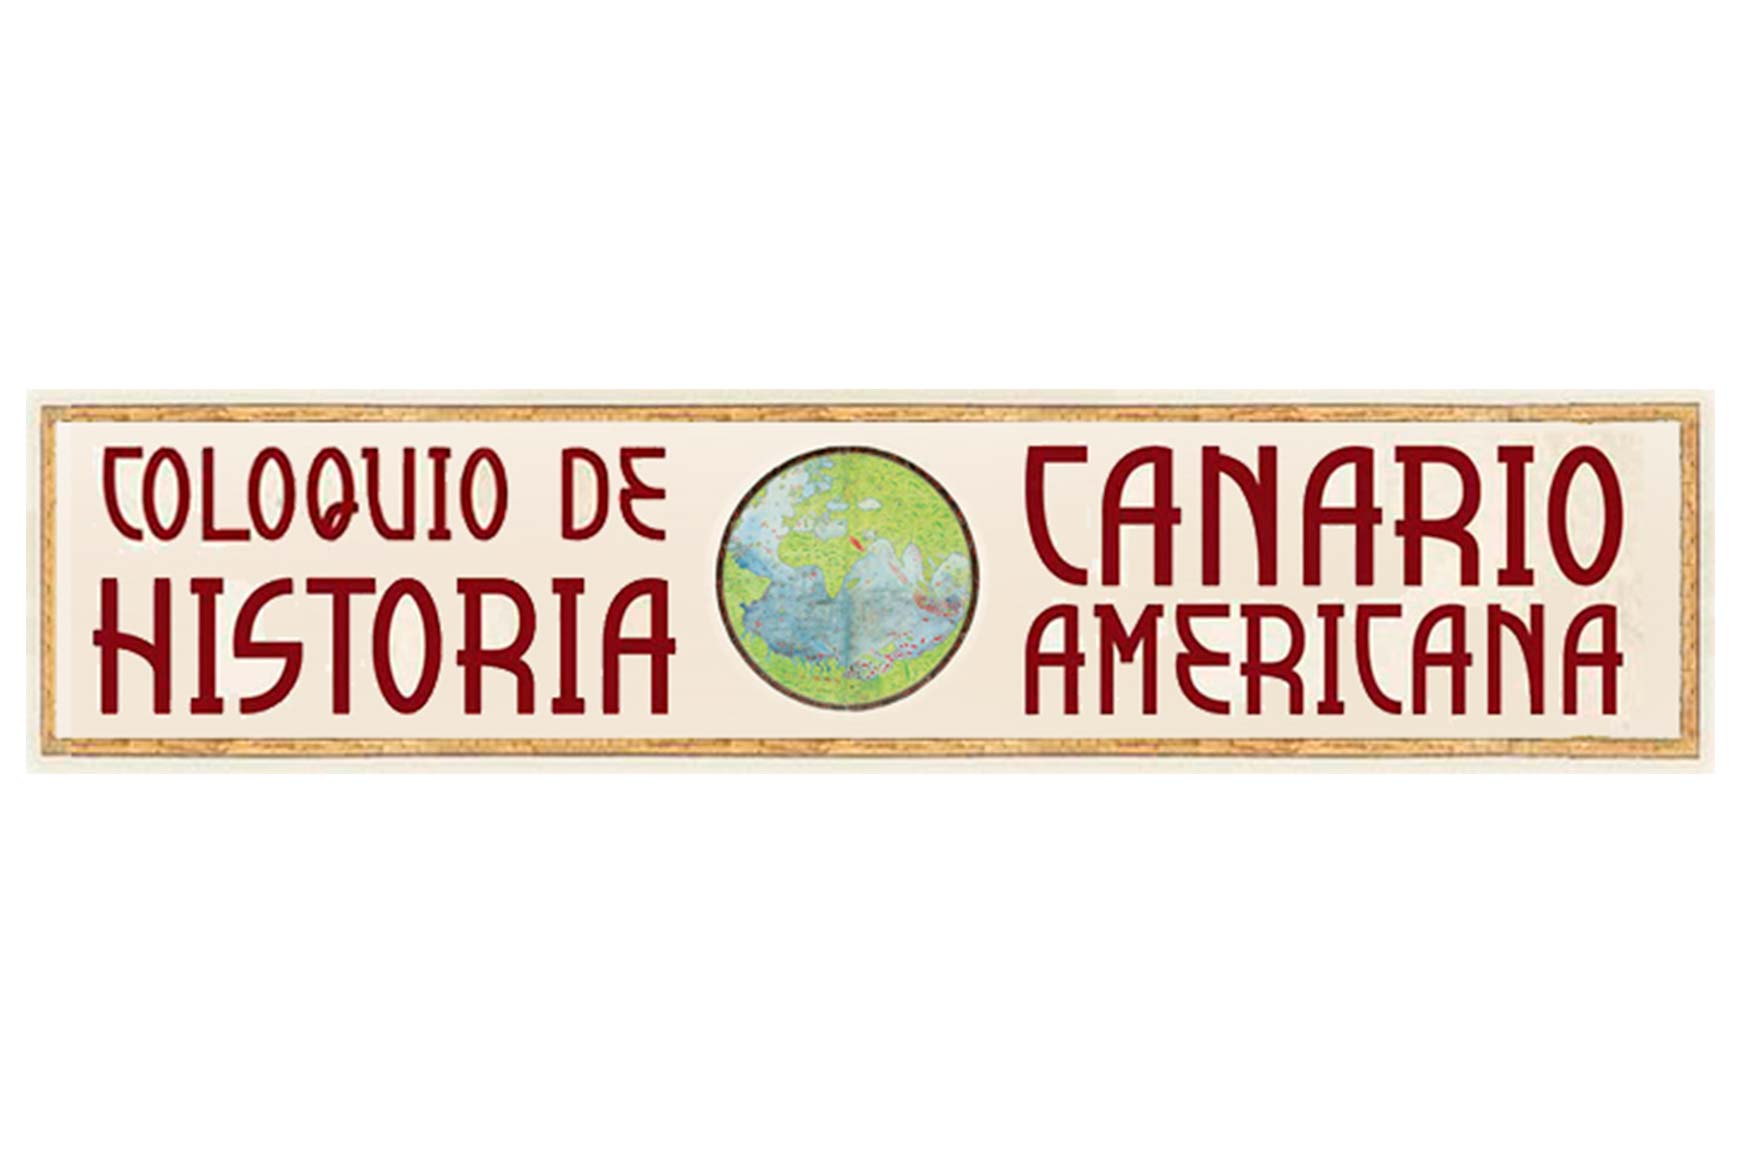 Coloquio de Historia Canario Americana